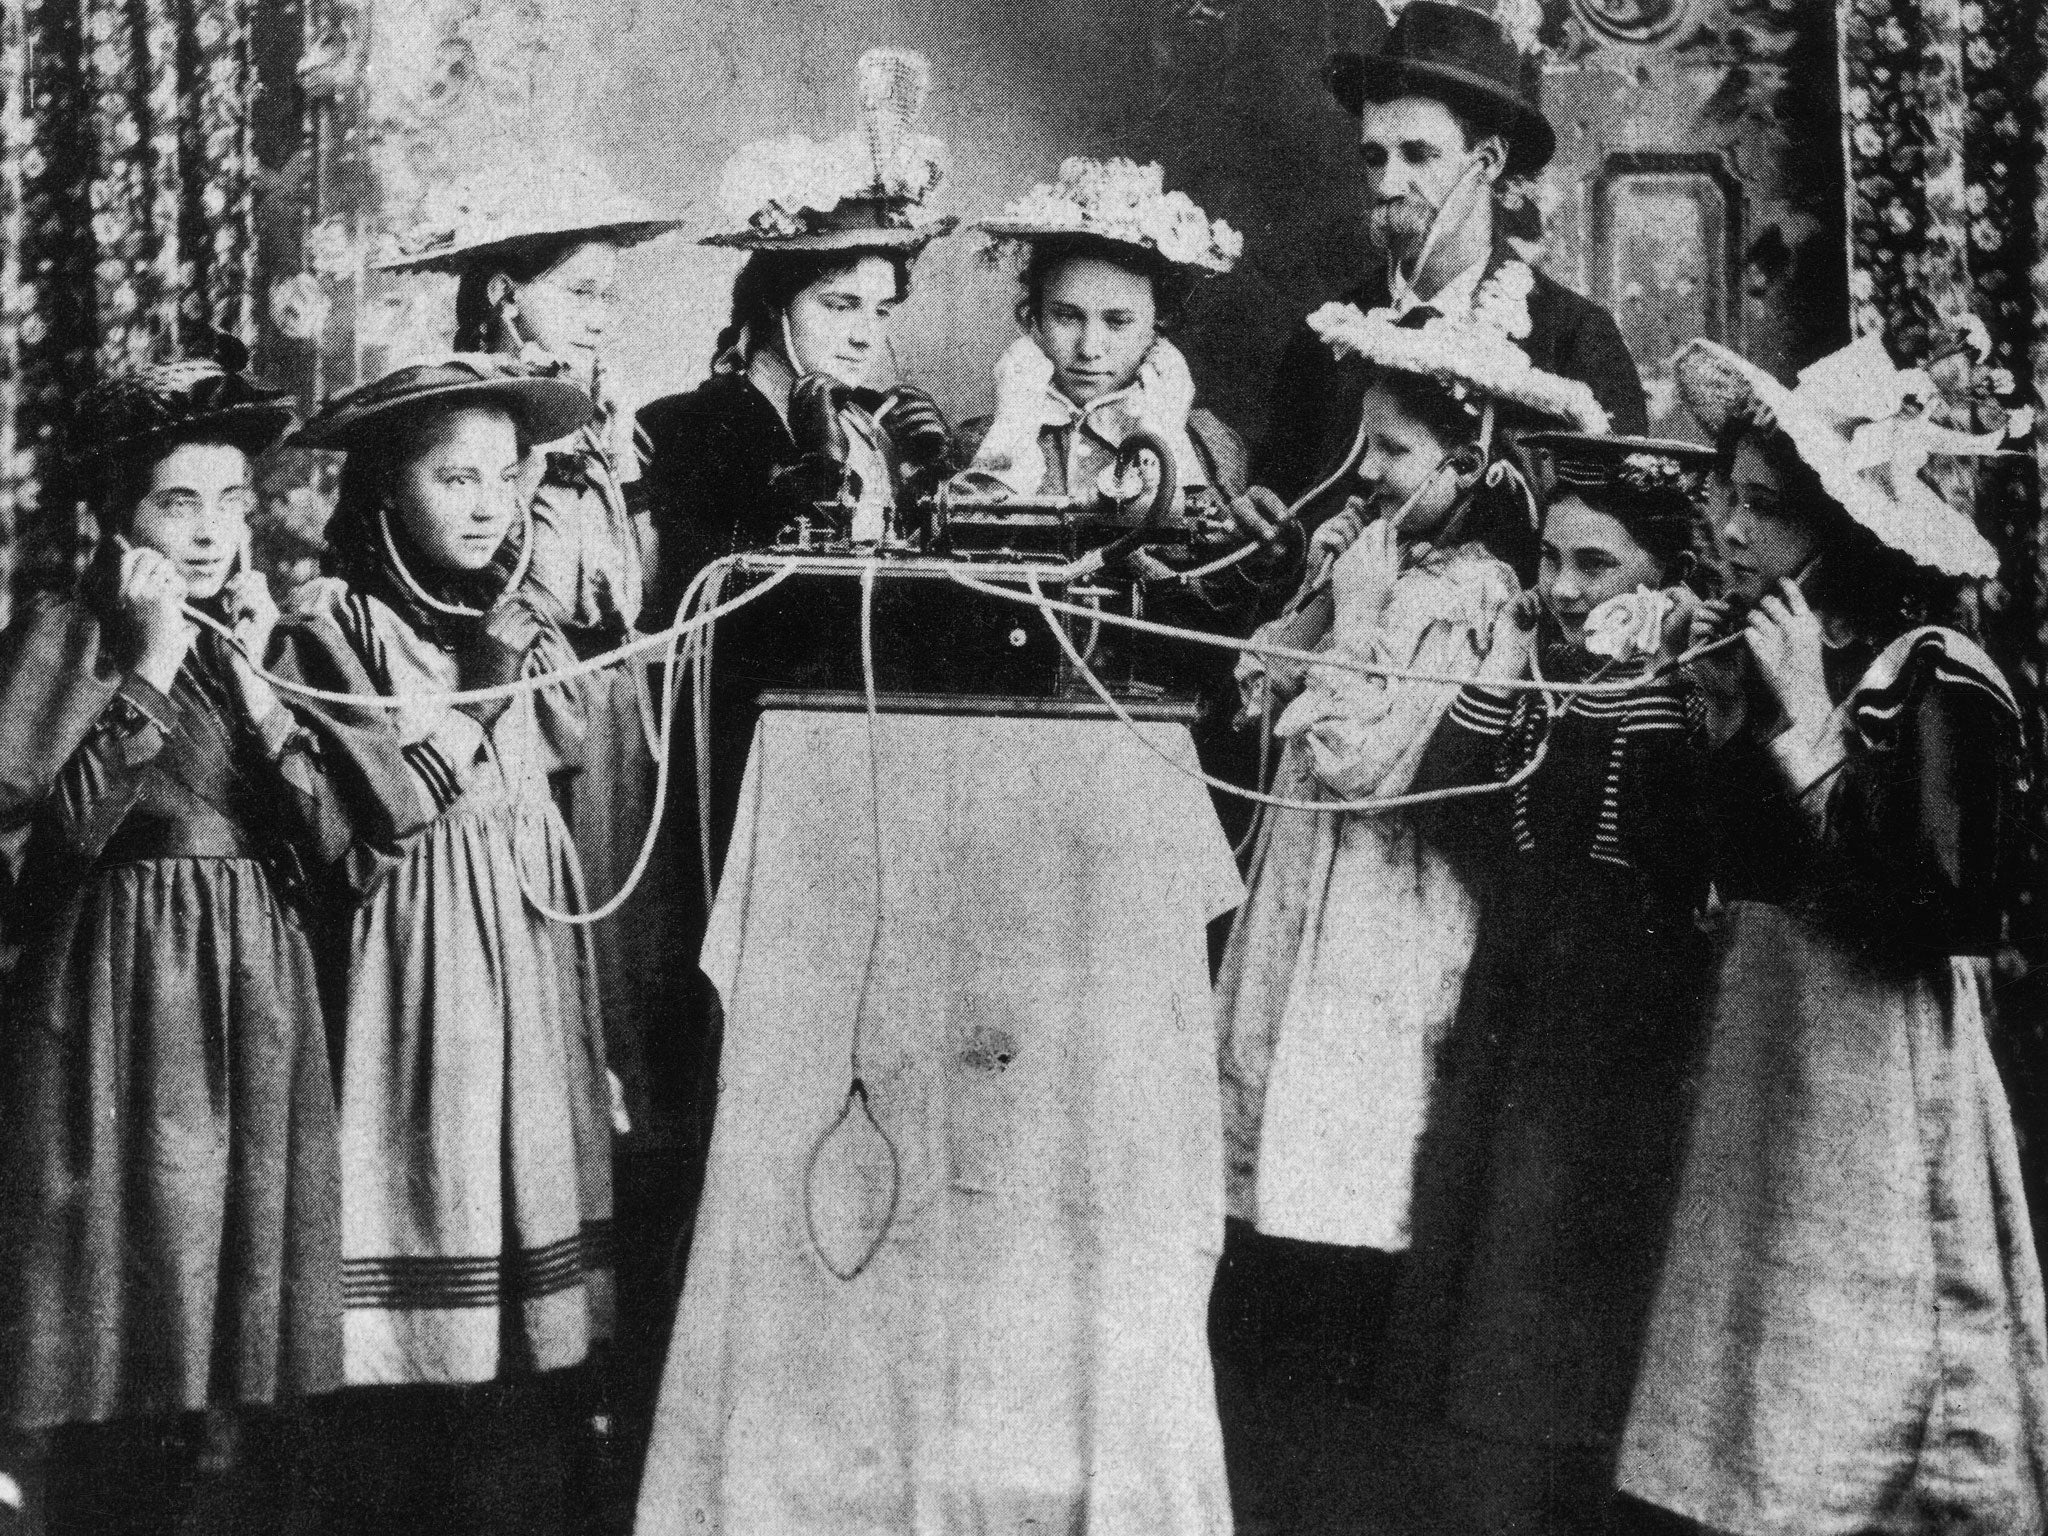 A group of people listen to a jukebox in Salina, Kansas circa 1890